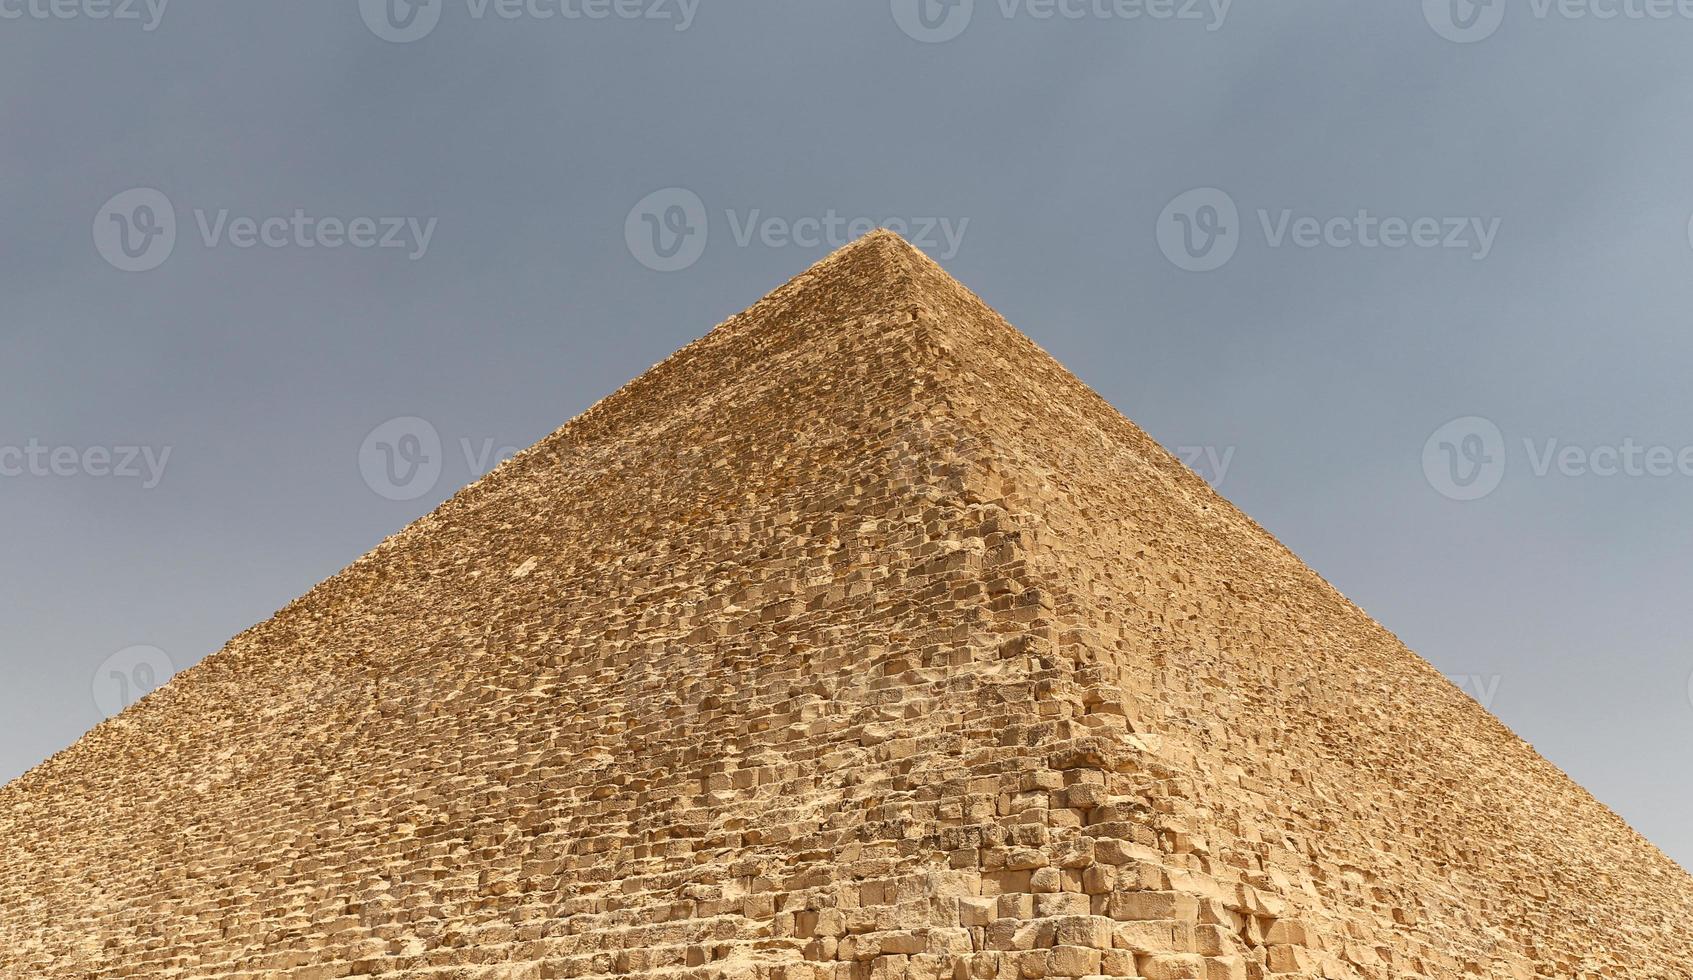 grande pirâmide de gizé no complexo de pirâmides de gizé, cairo, egito foto